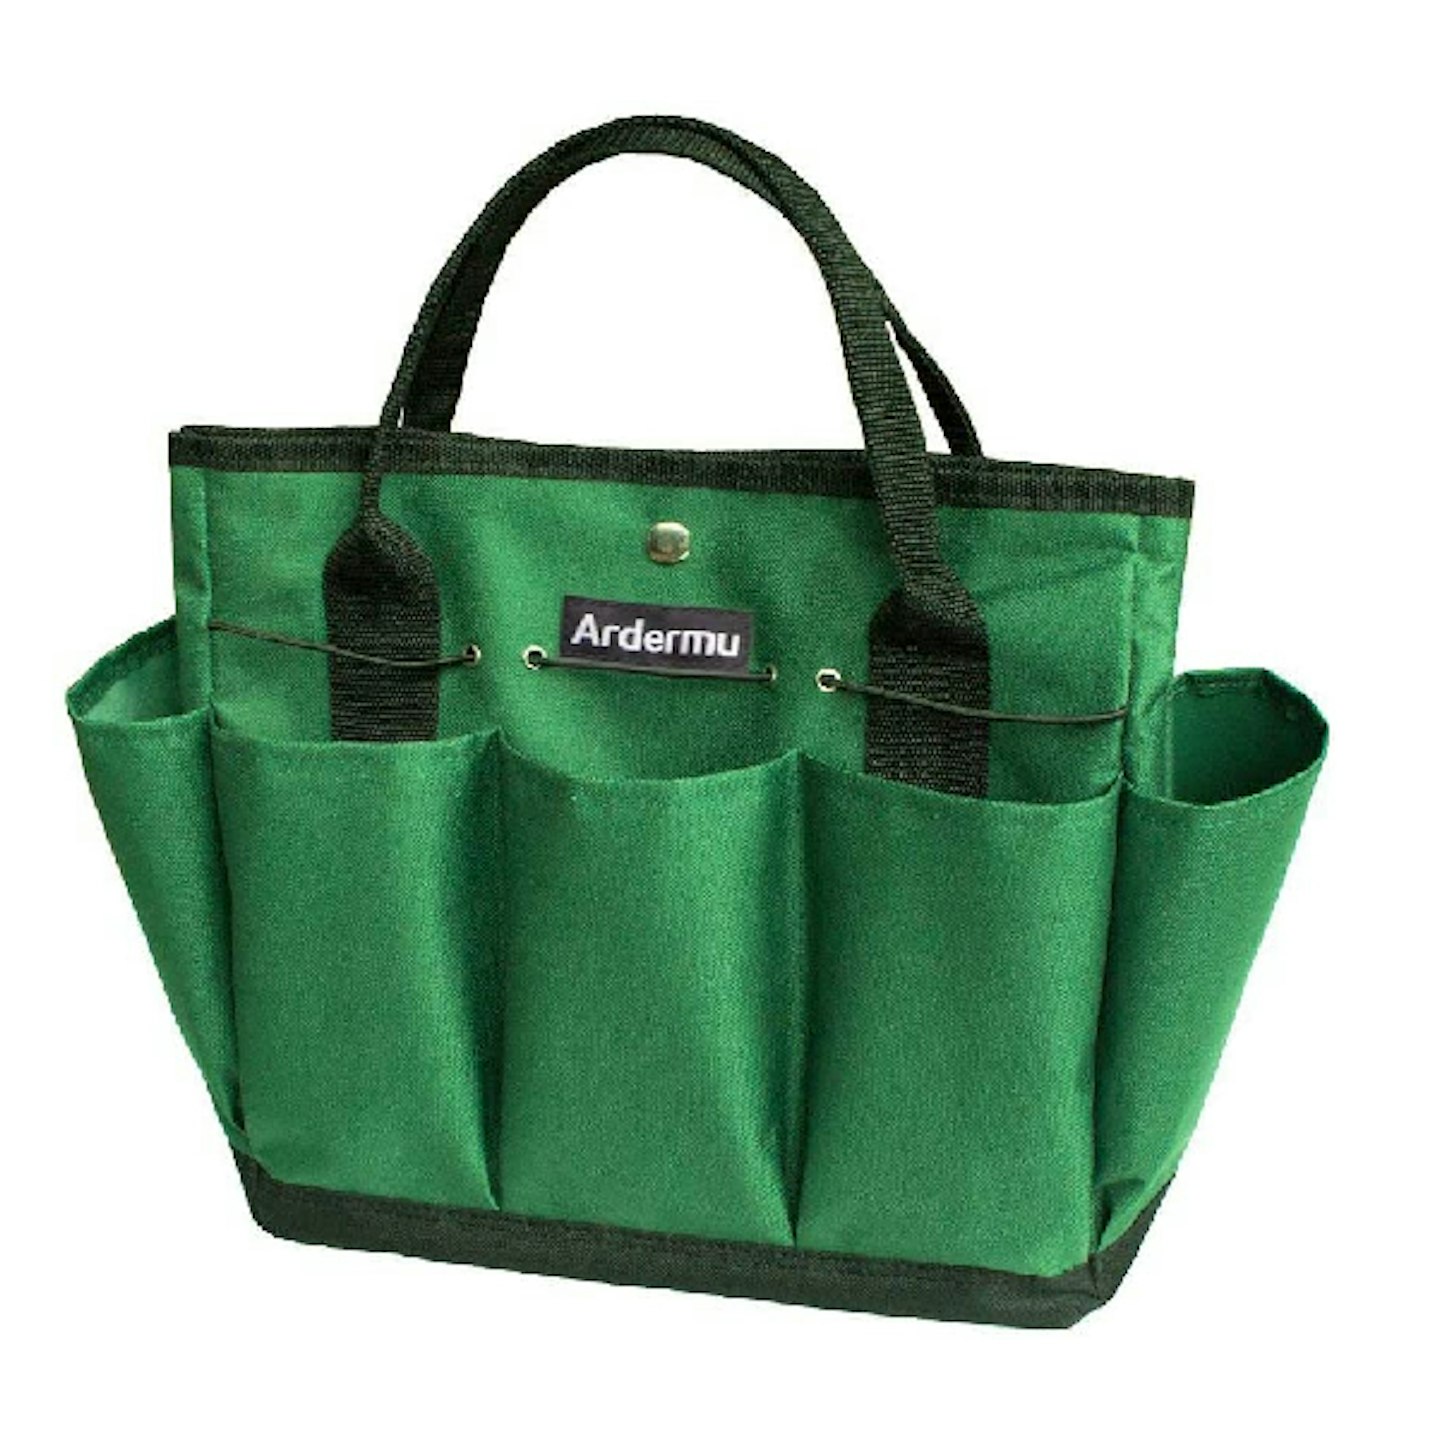 Ardermu Gardening Tool Storage Bag